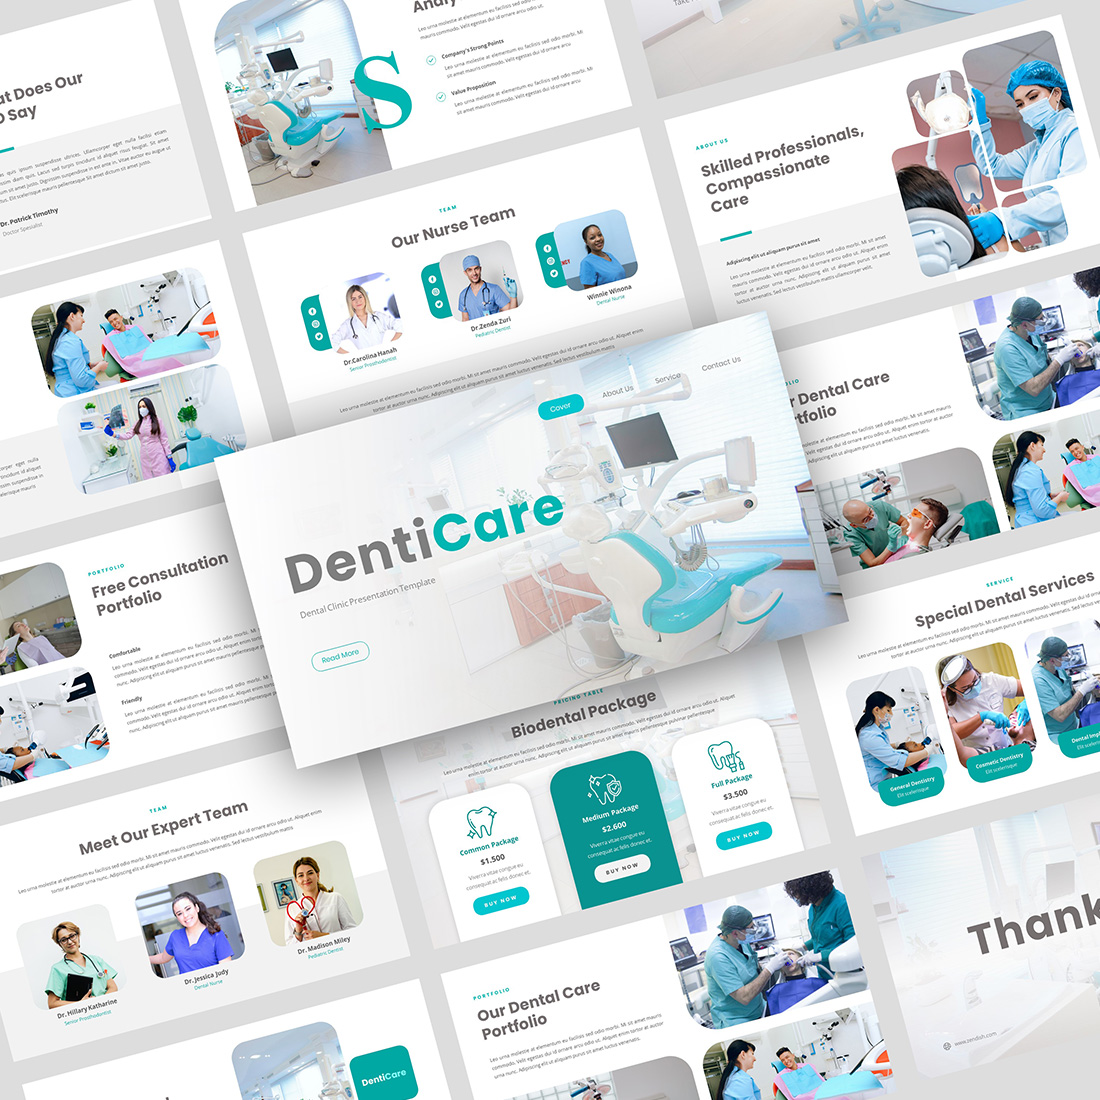 DentiCare-Dental Clinic Google Slides Template cover image.